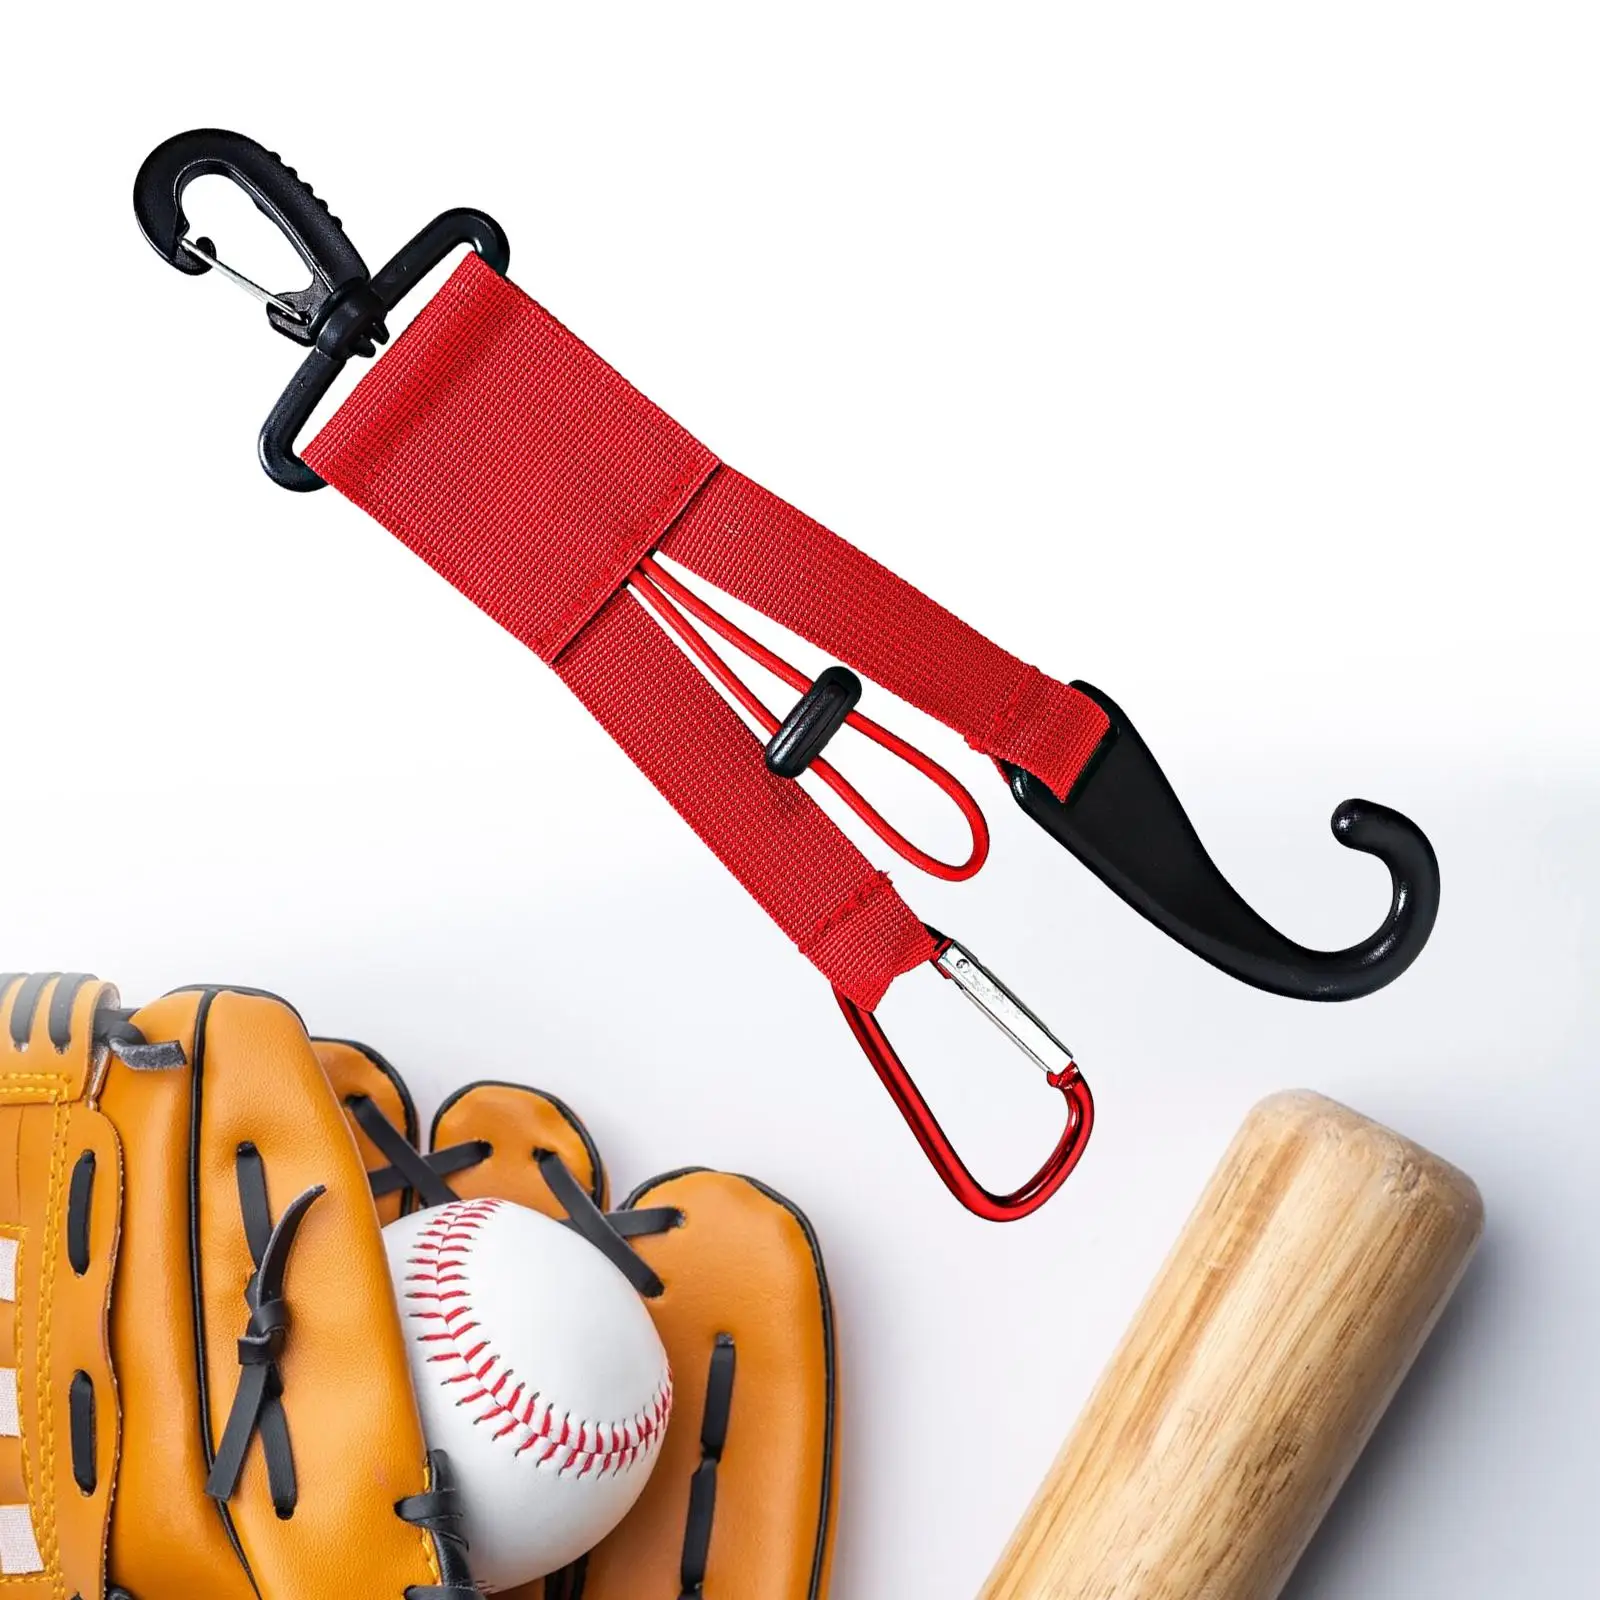 Baseball Softball Gear Hanger Dugout Organizer Cup Holder Fence Hooks Baseball Bats Holder for Fence Portable Bats Hanger 